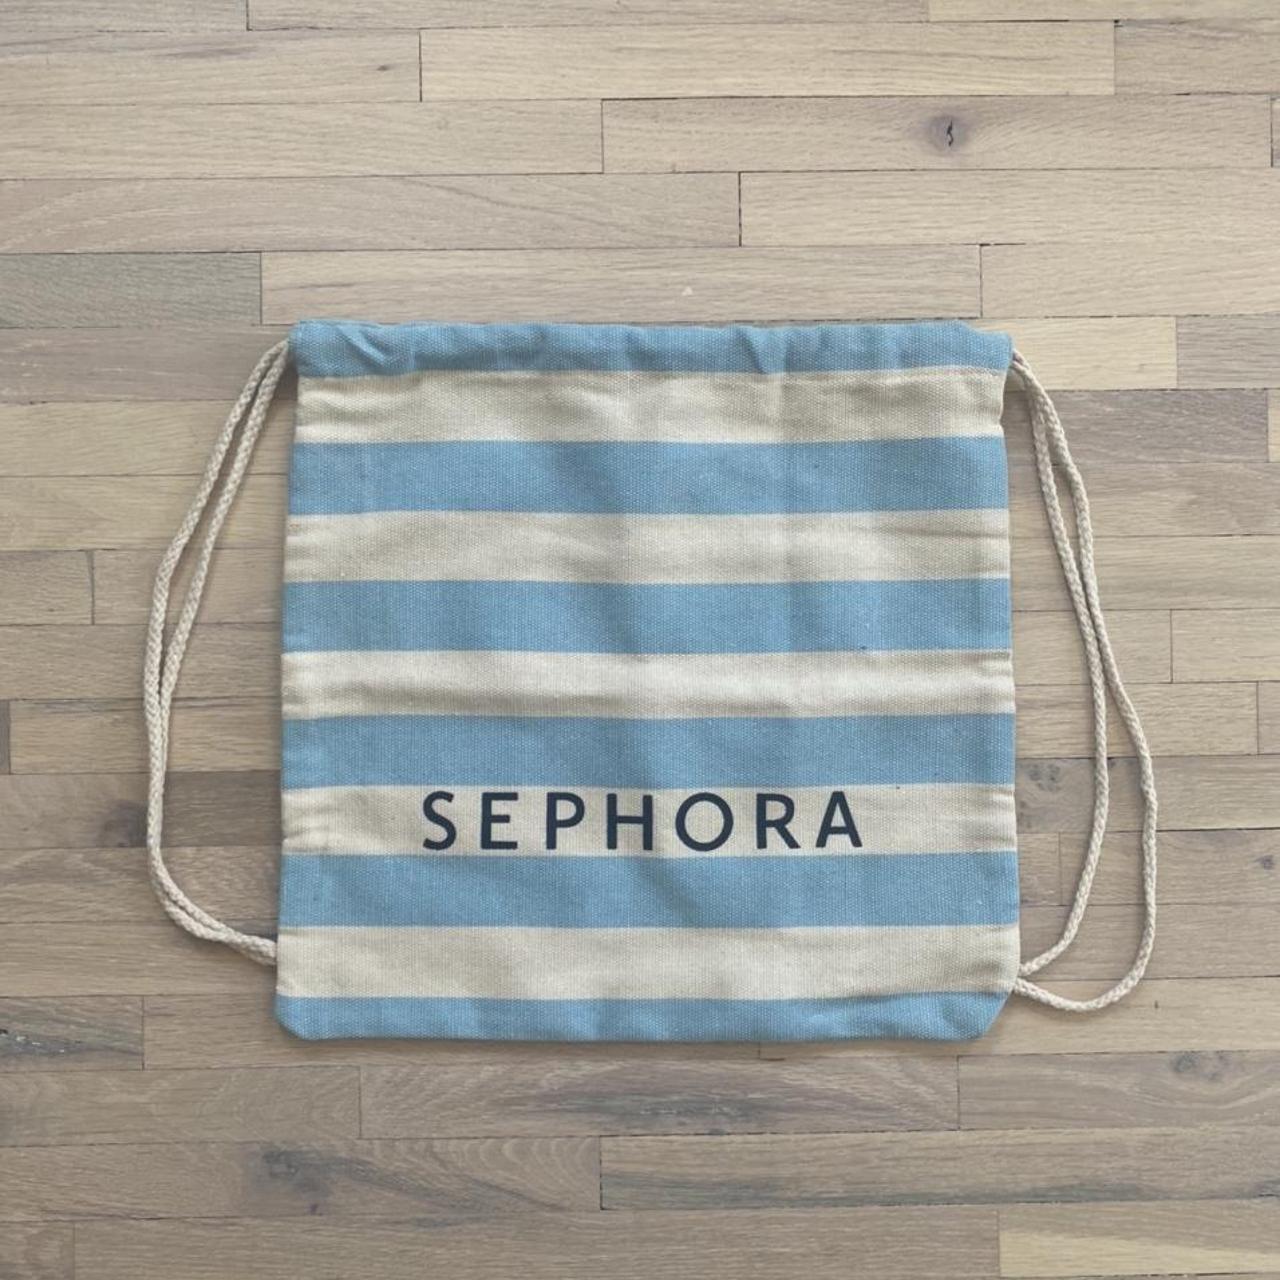 Sephora Women's White and Blue Bag (3)